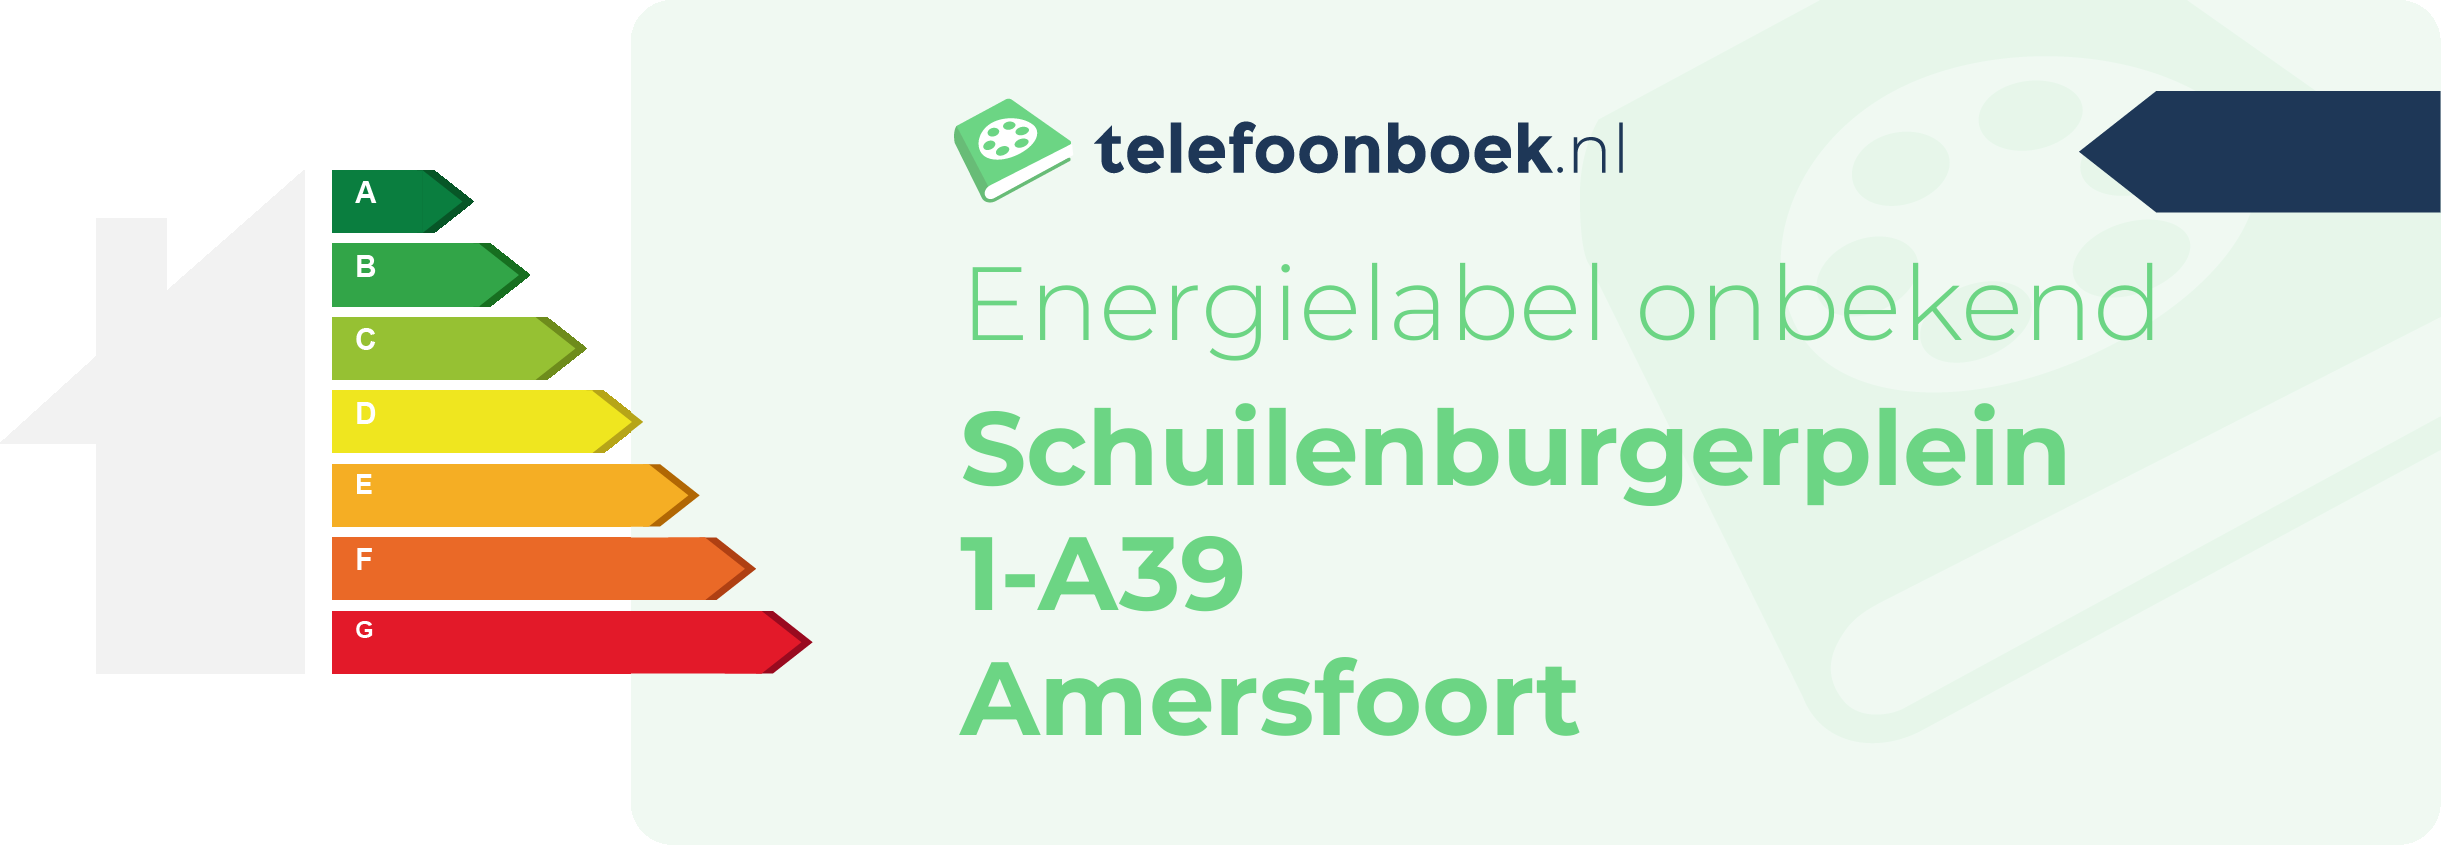 Energielabel Schuilenburgerplein 1-A39 Amersfoort